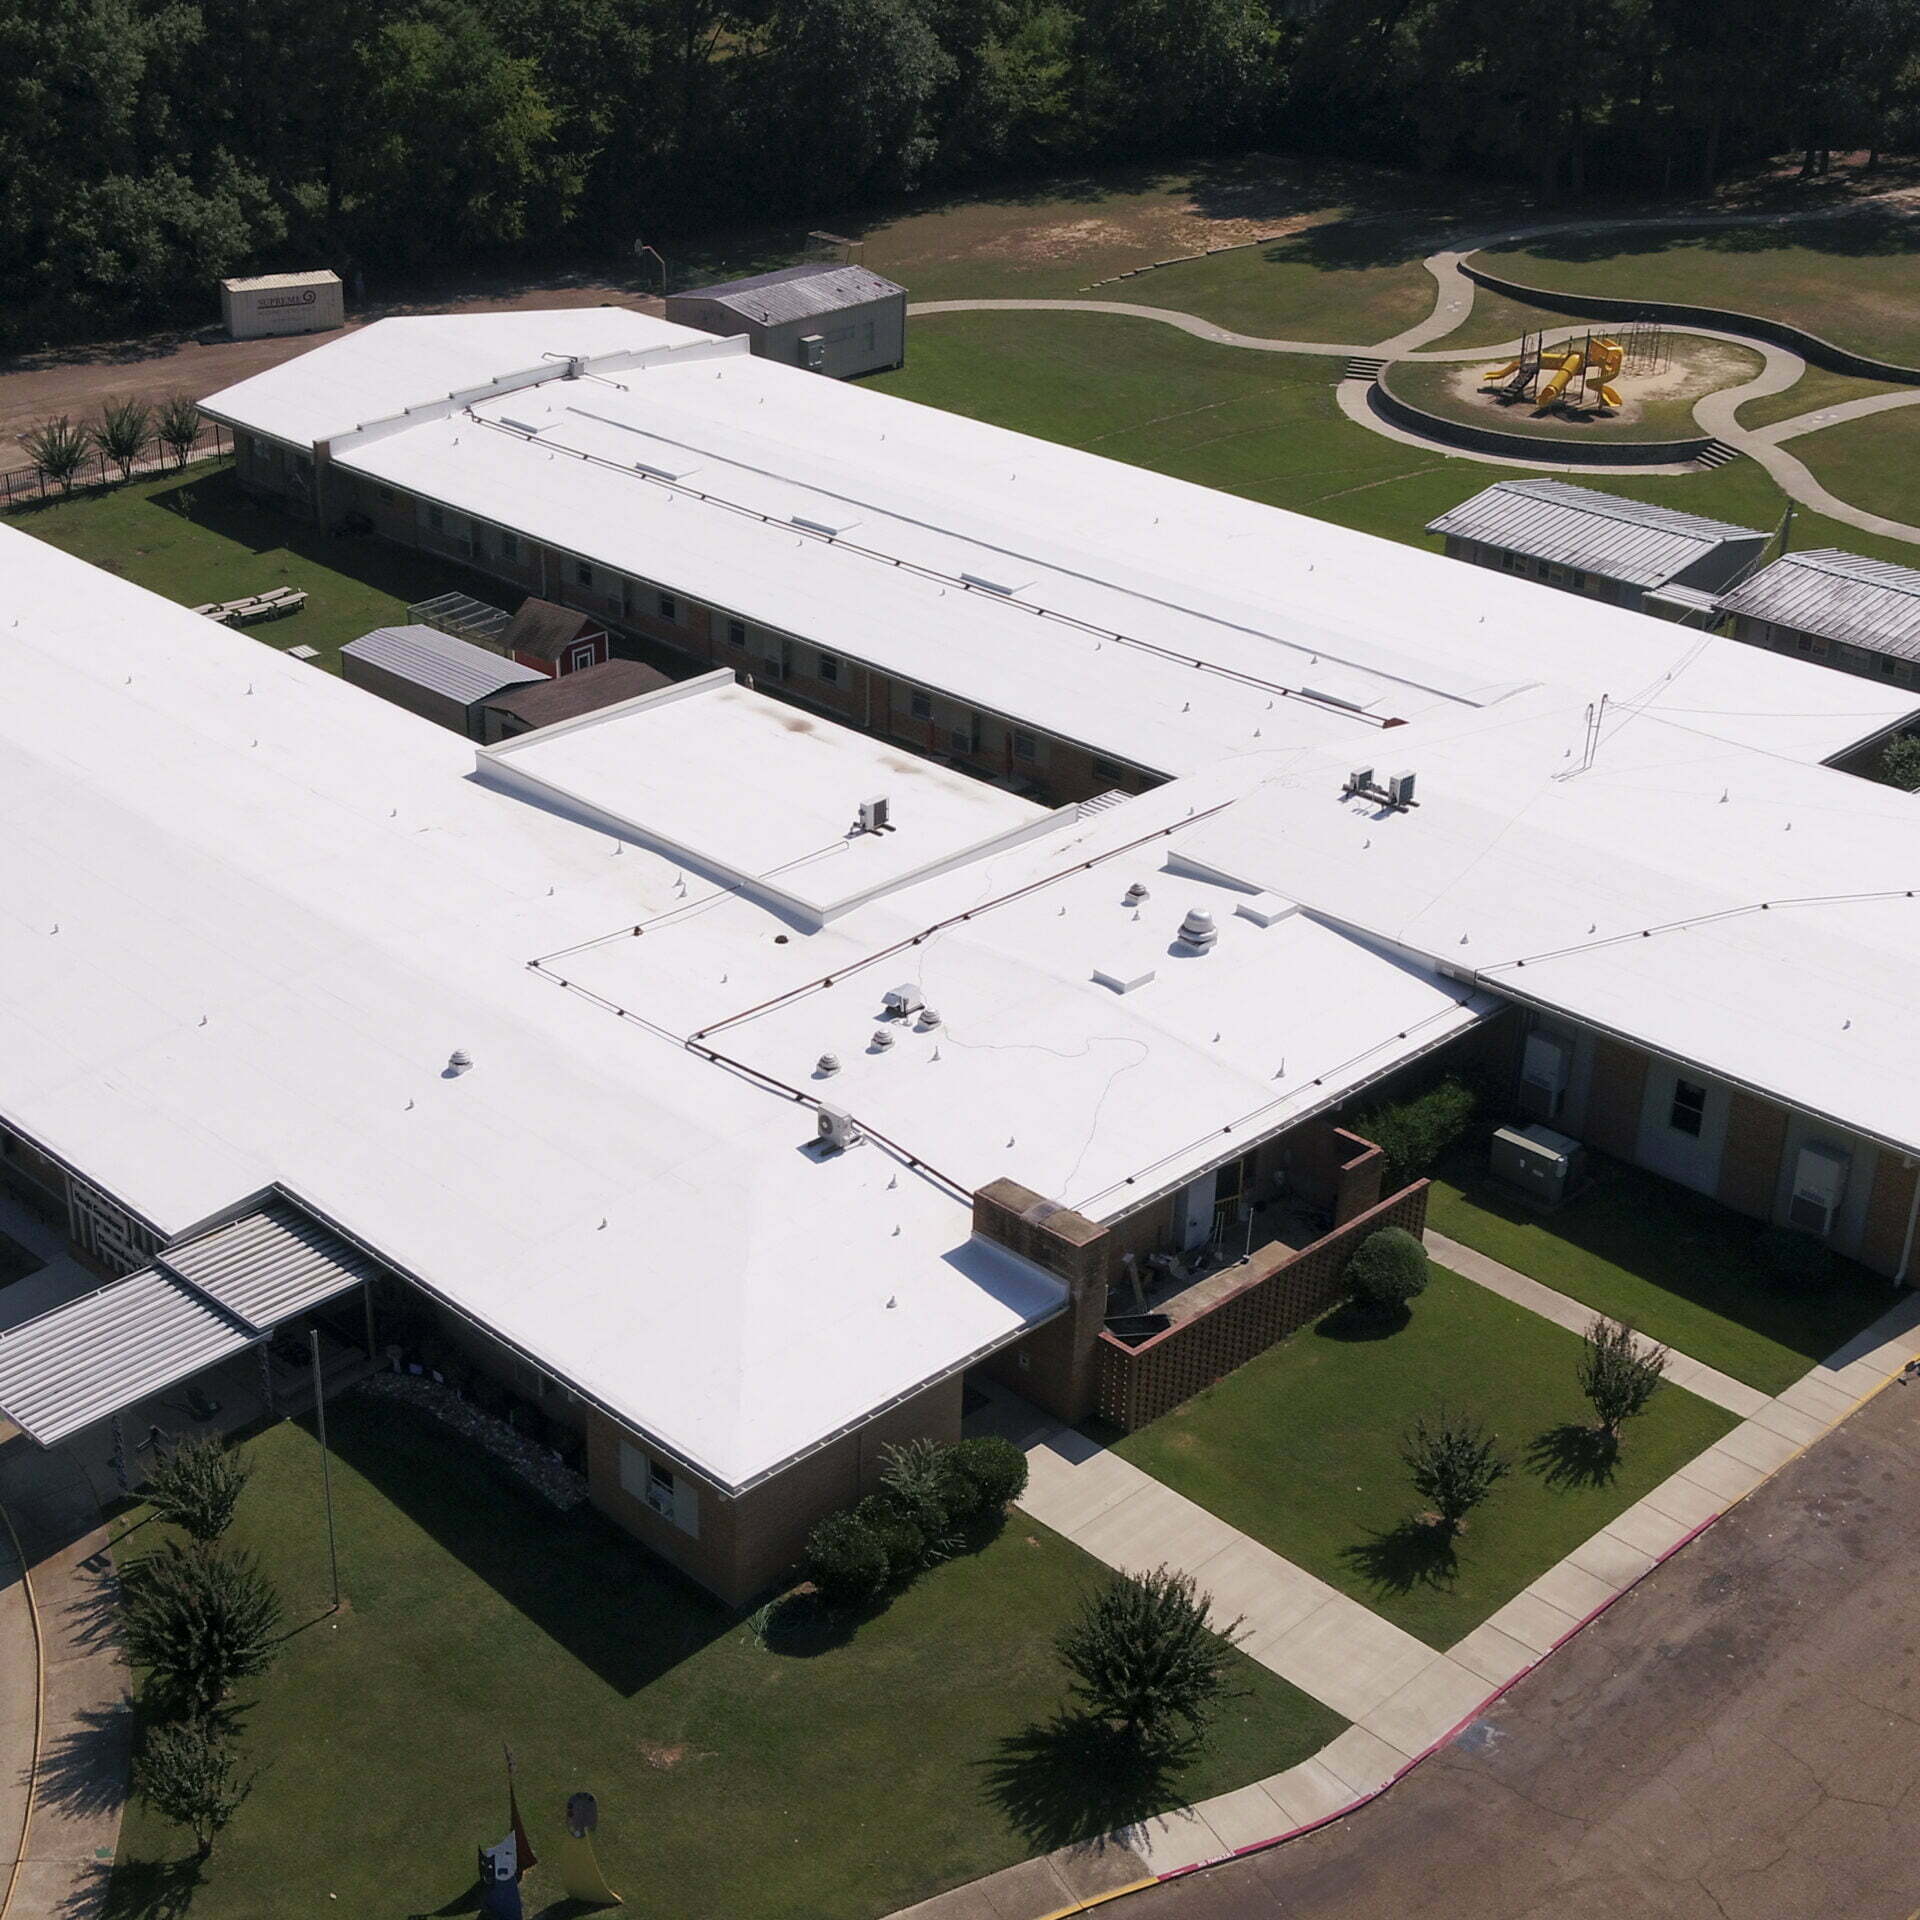 Image shot at Hugh Goodwin School, Drone Completed Shots, El Dorado, Arkansas, October 8, 2021, Jeffrey Parr/Supreme Roofing